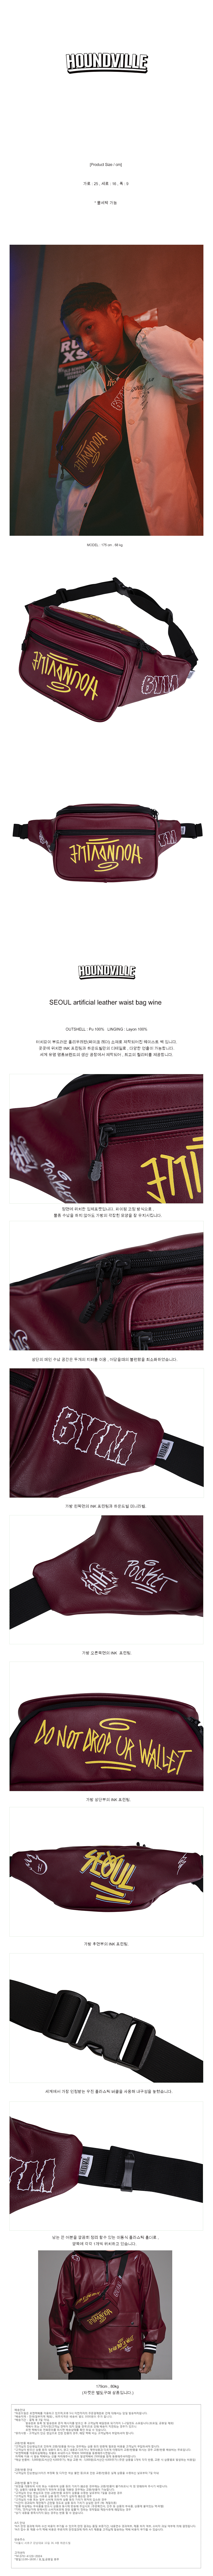 SEOUL artificial leather waist bag wine.jpg